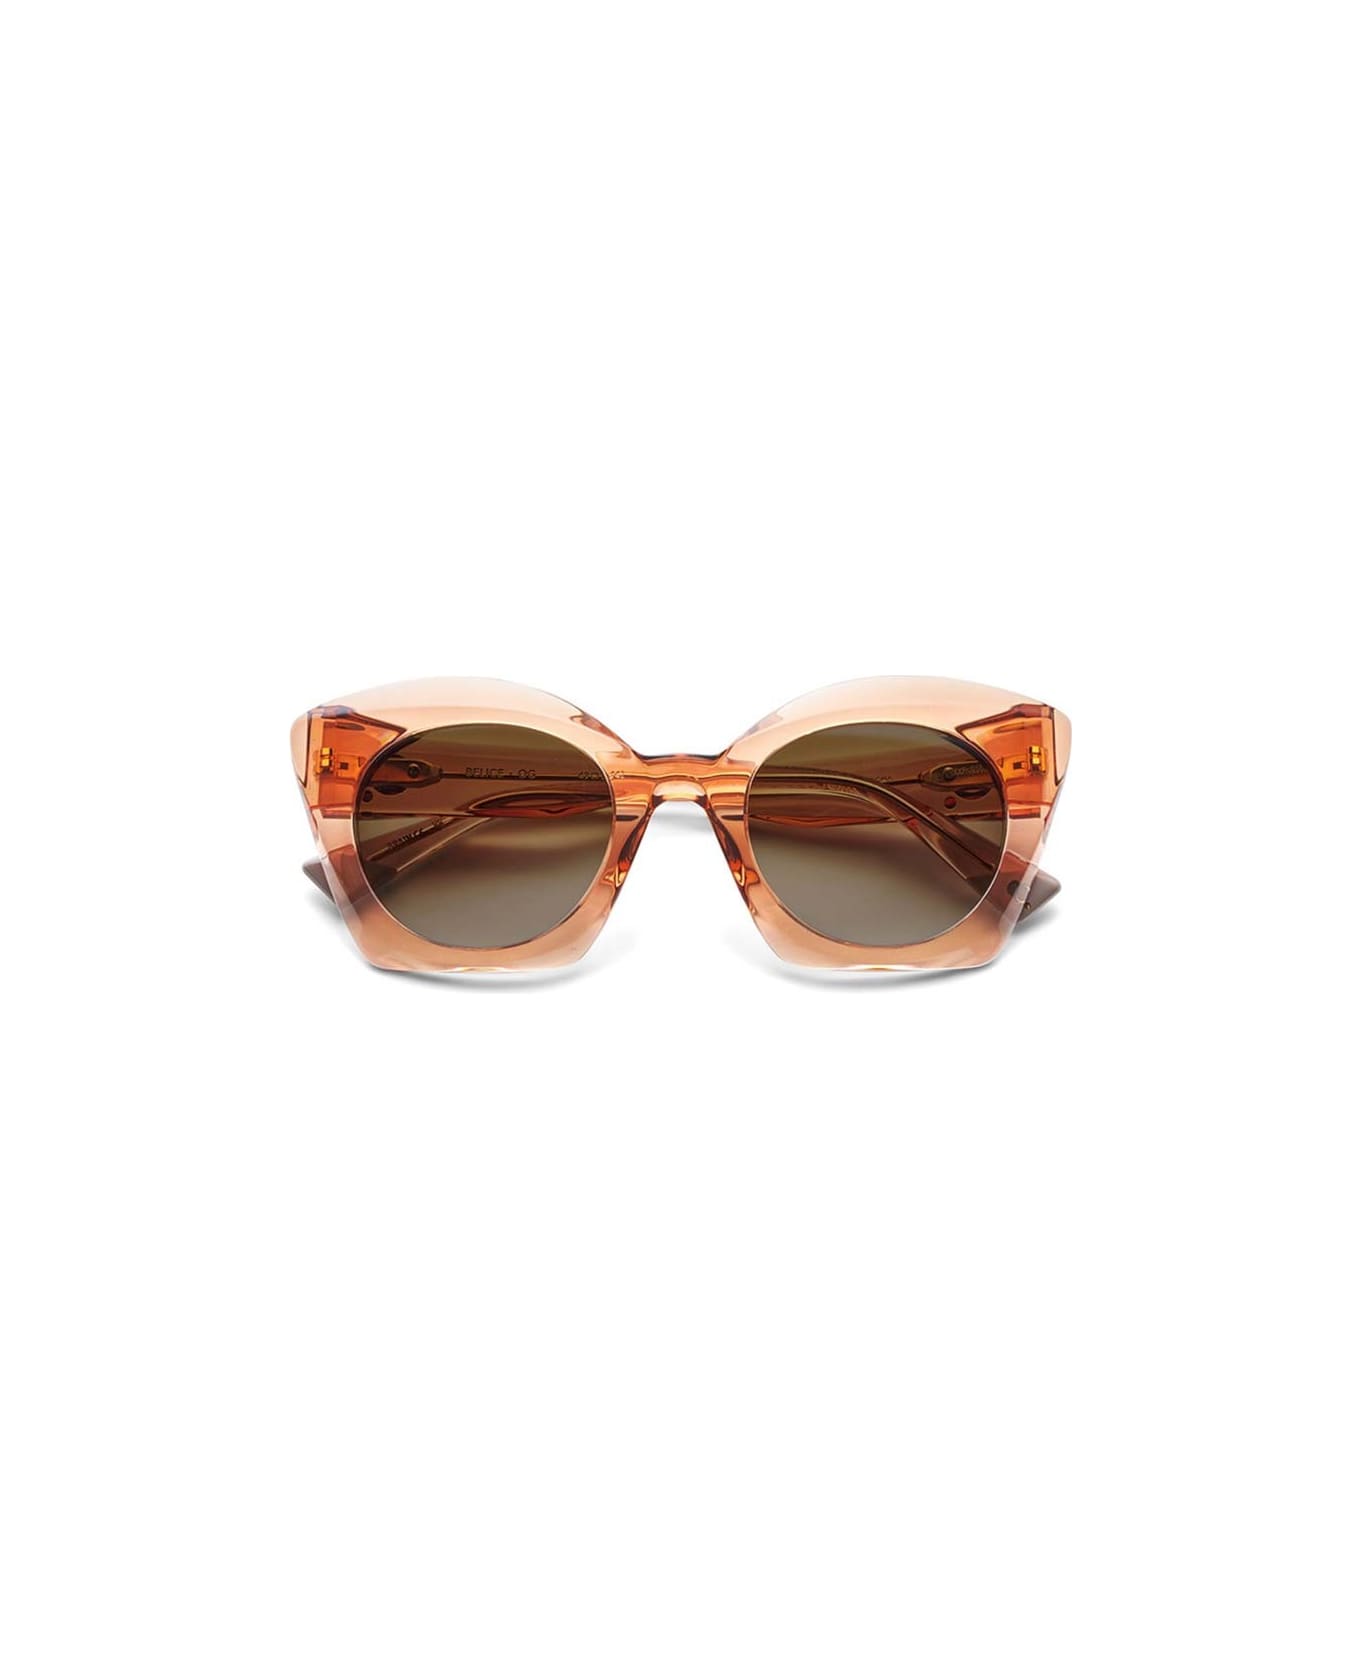 Etnia Barcelona Sunglasses - Arancione/Marrone